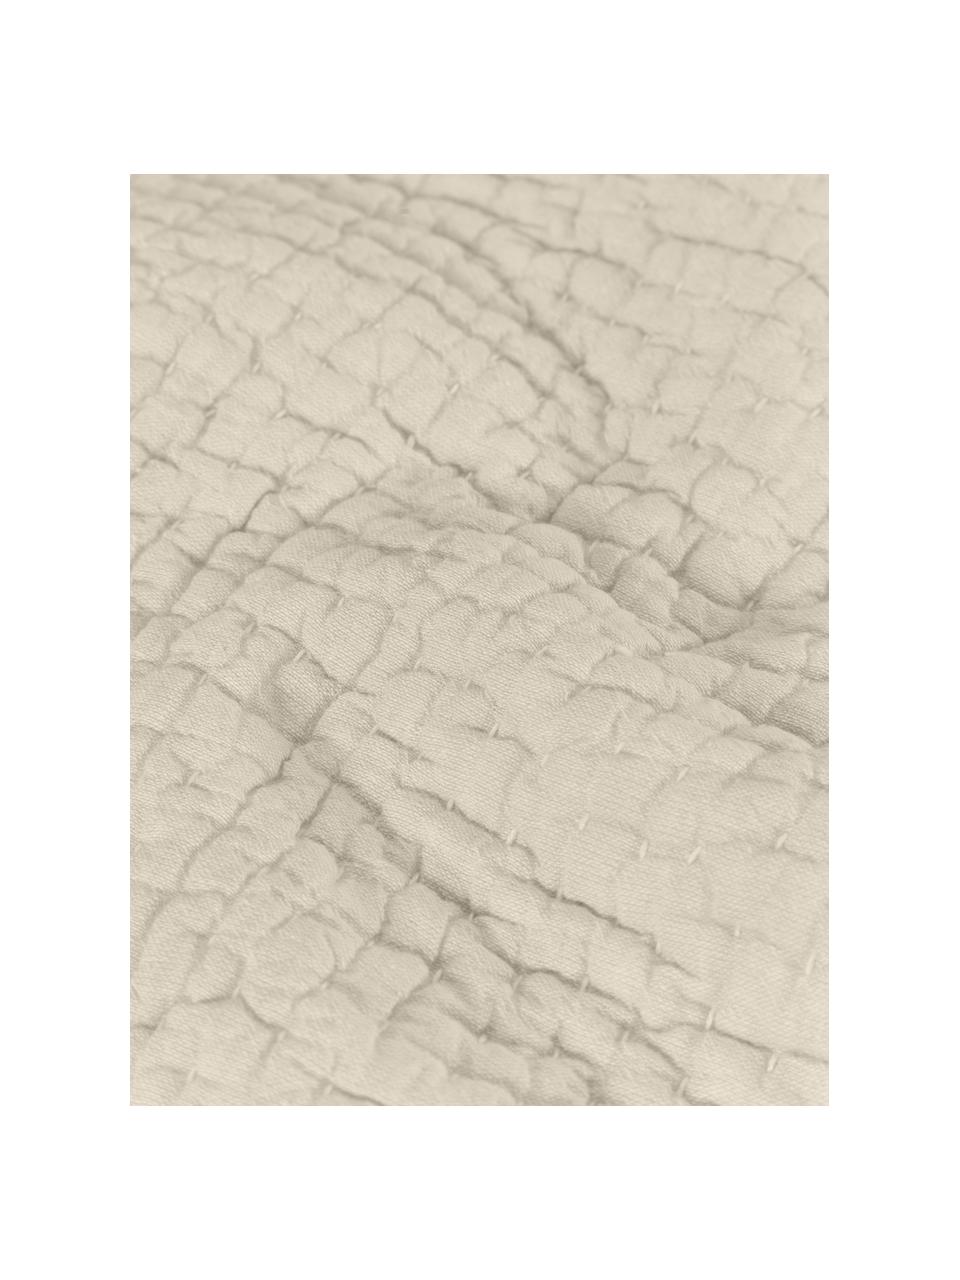 Kussenhoes Stripes in beige, 100% katoen, Beige, crèmewit, B 45 x L 45 cm